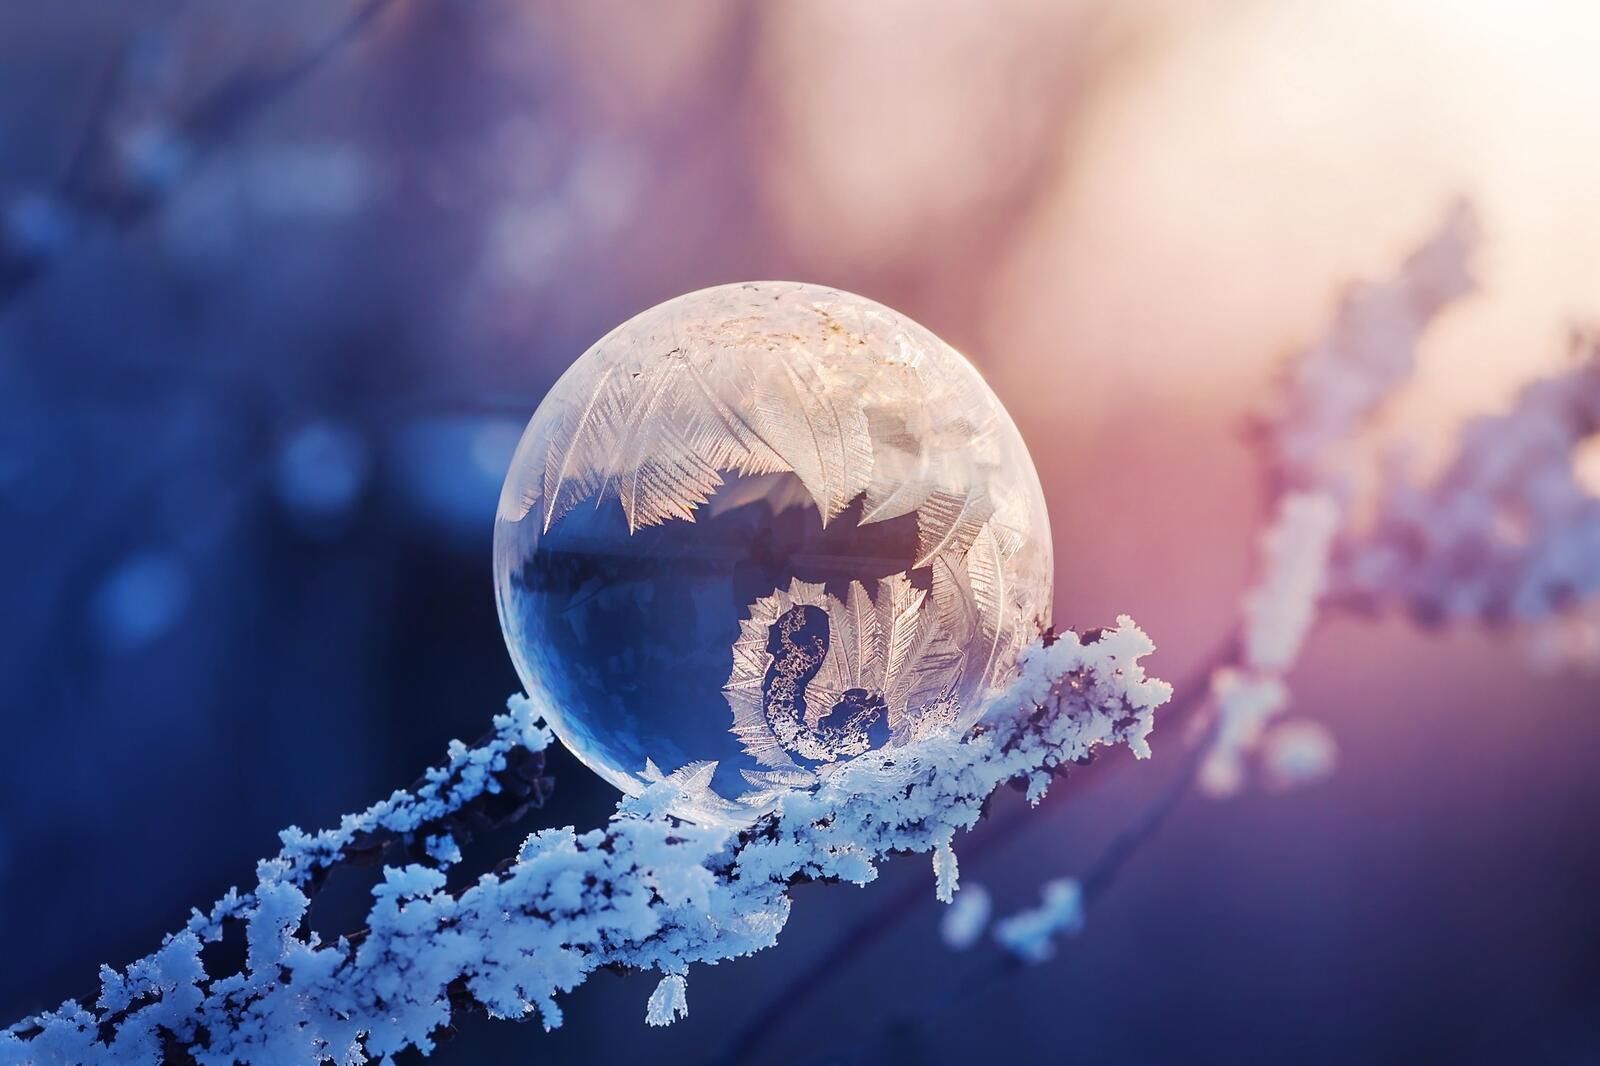 Wallpapers frozen bubble winter photos on the desktop